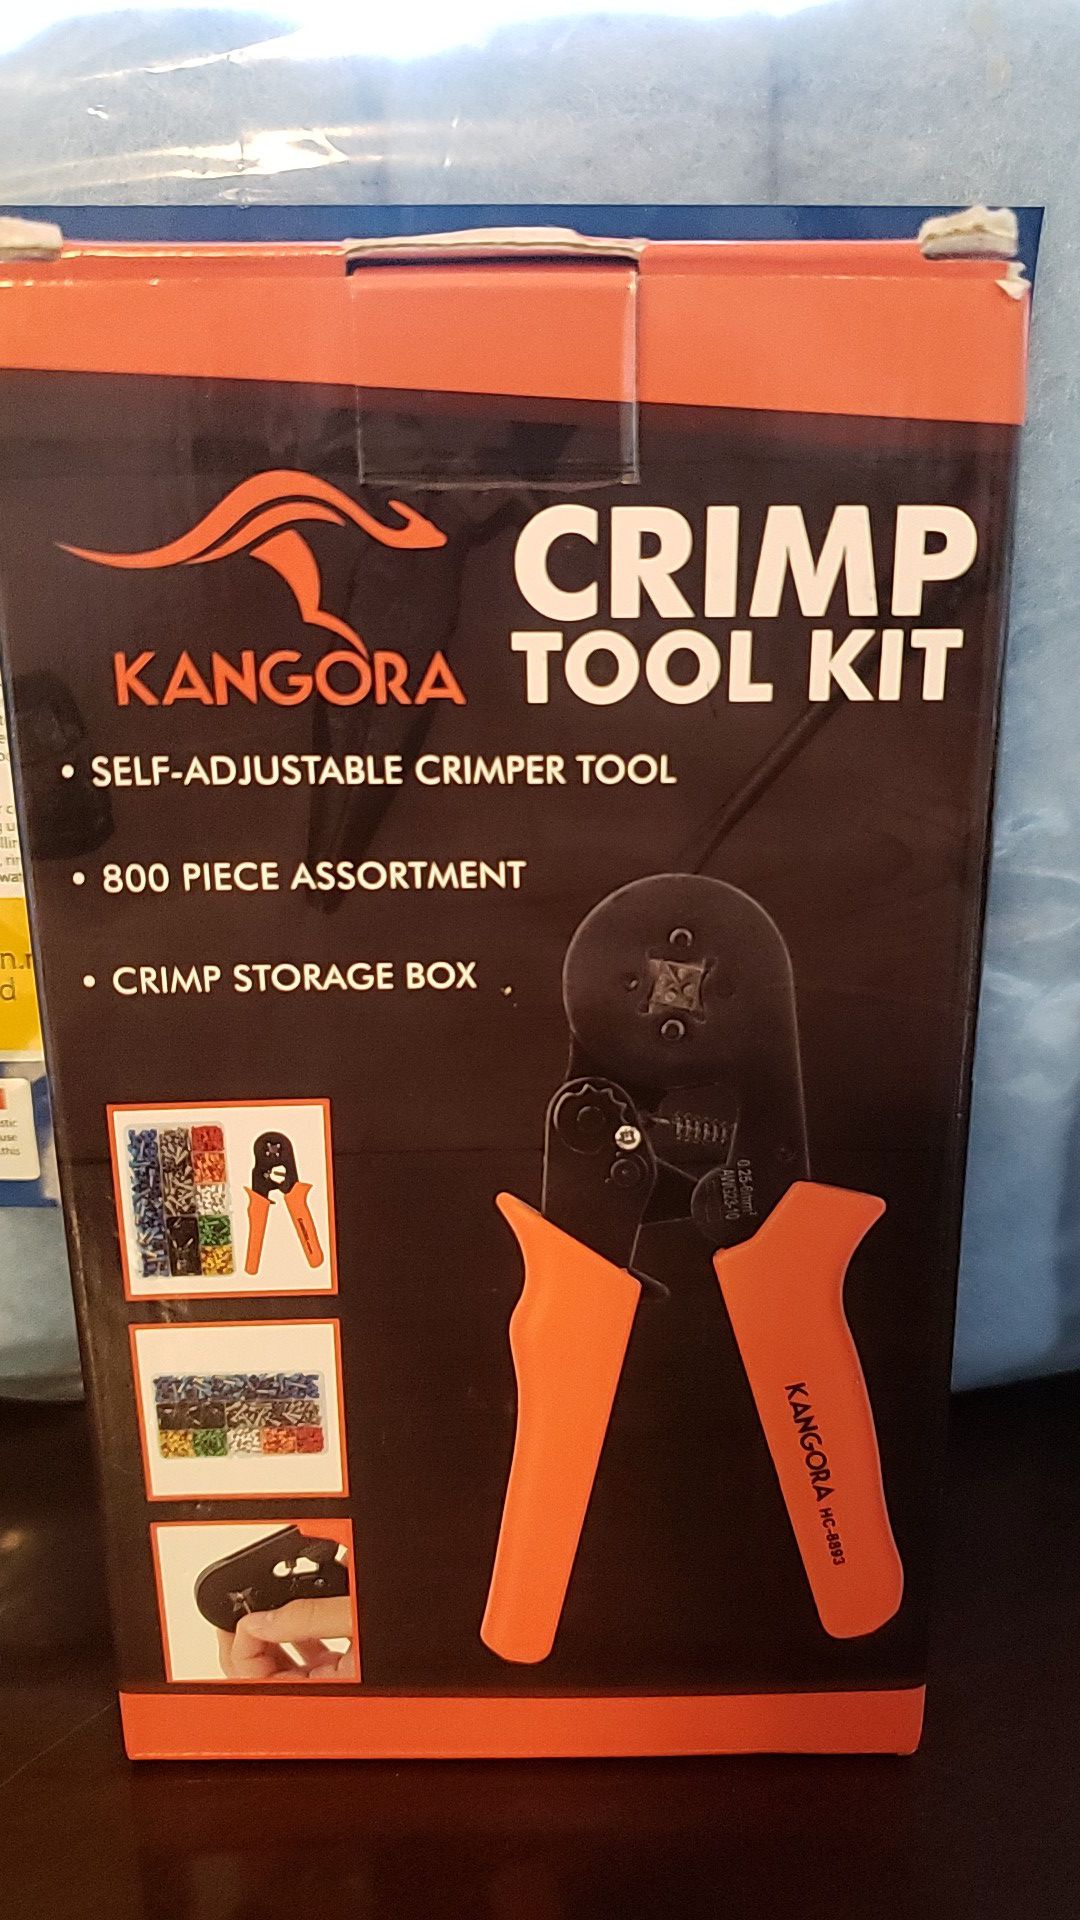 New Still In Box -Kangora Crimp Tool Kit 800Piece Tool Kit $20